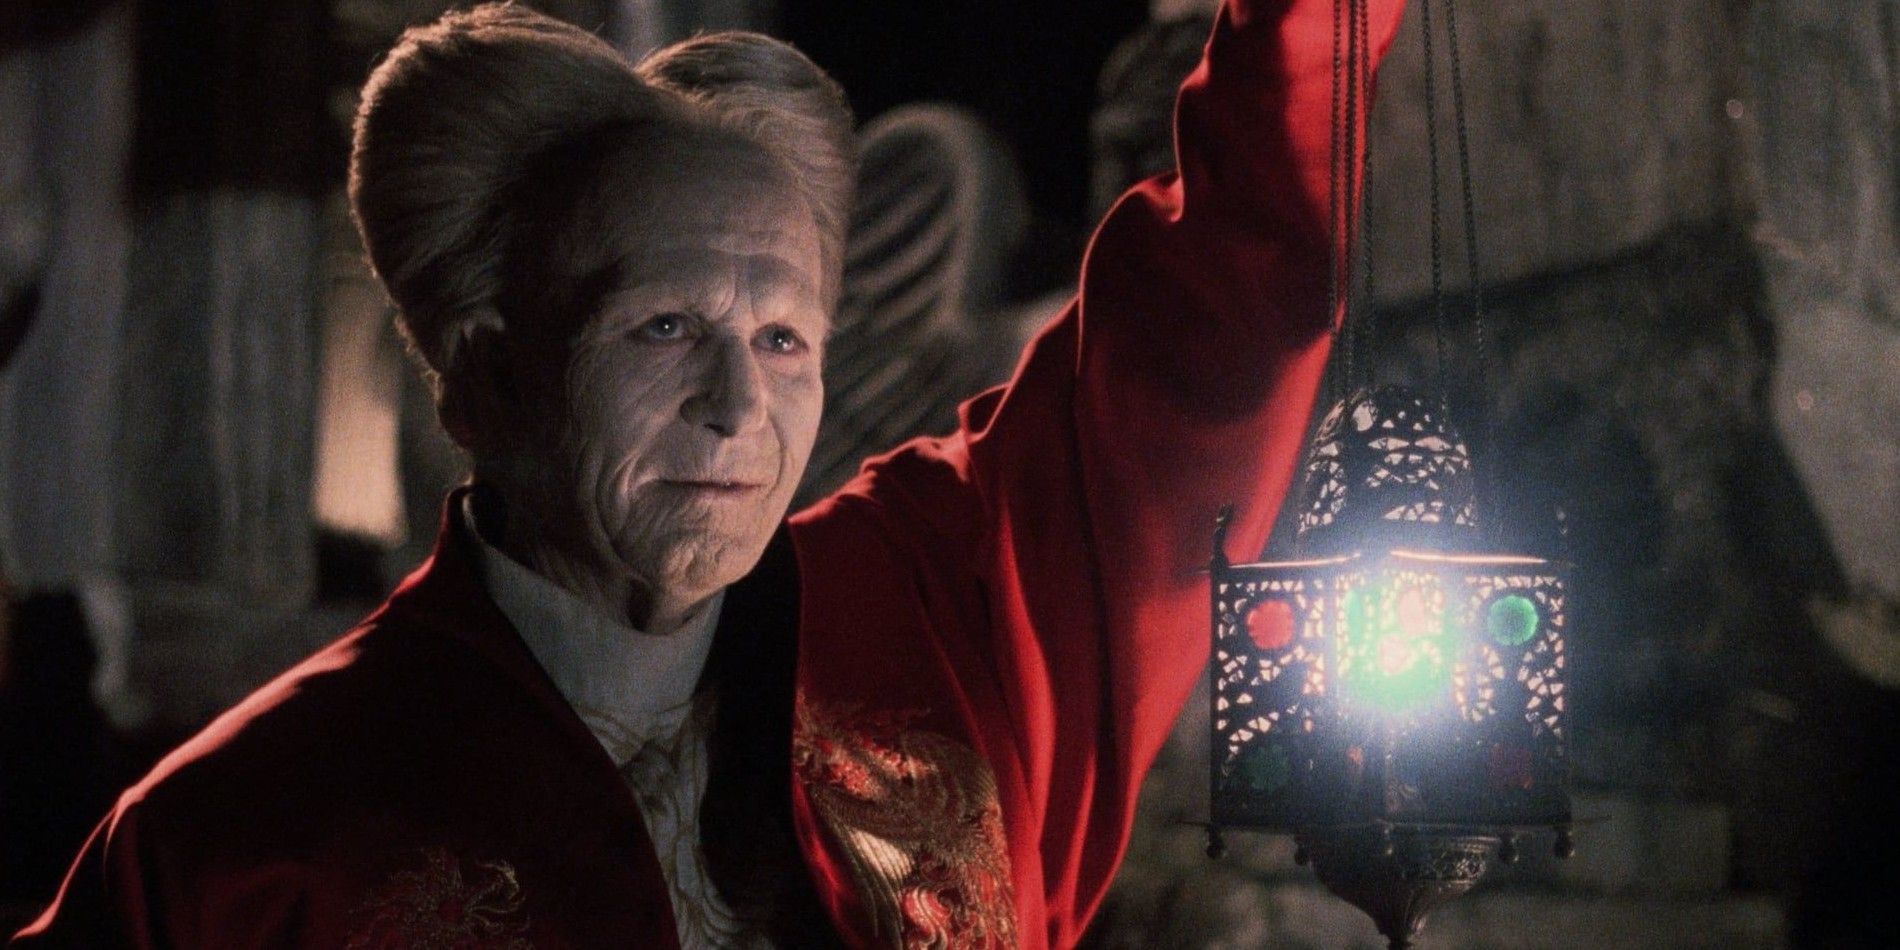 Gary Oldman as Dracula holding a lantern in Bram Stoker's Dracula